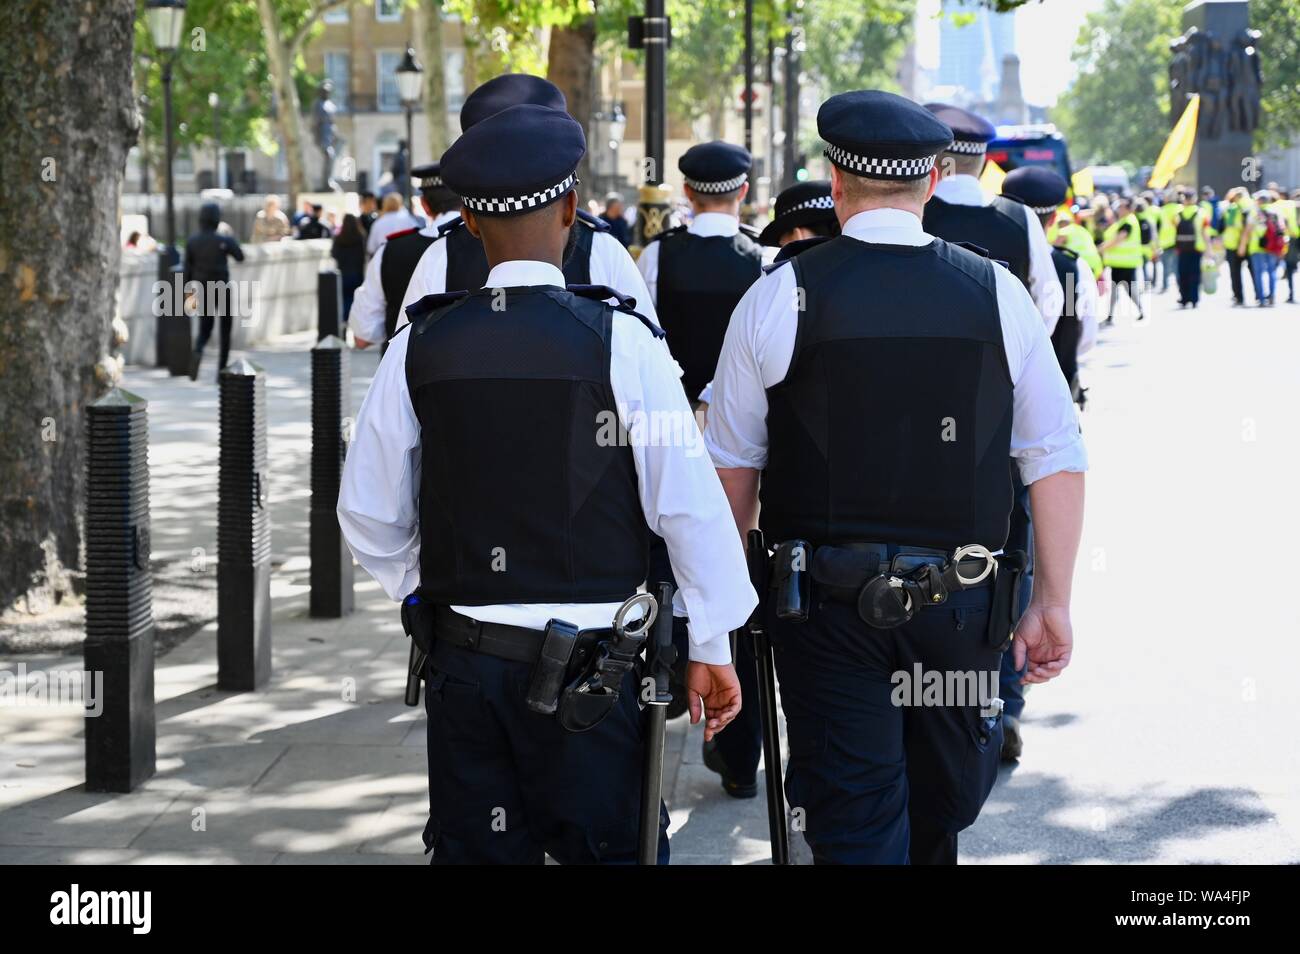 Police Officers. Hong Kong Solidarity Rally, Whitehall, London. UK Stock Photo